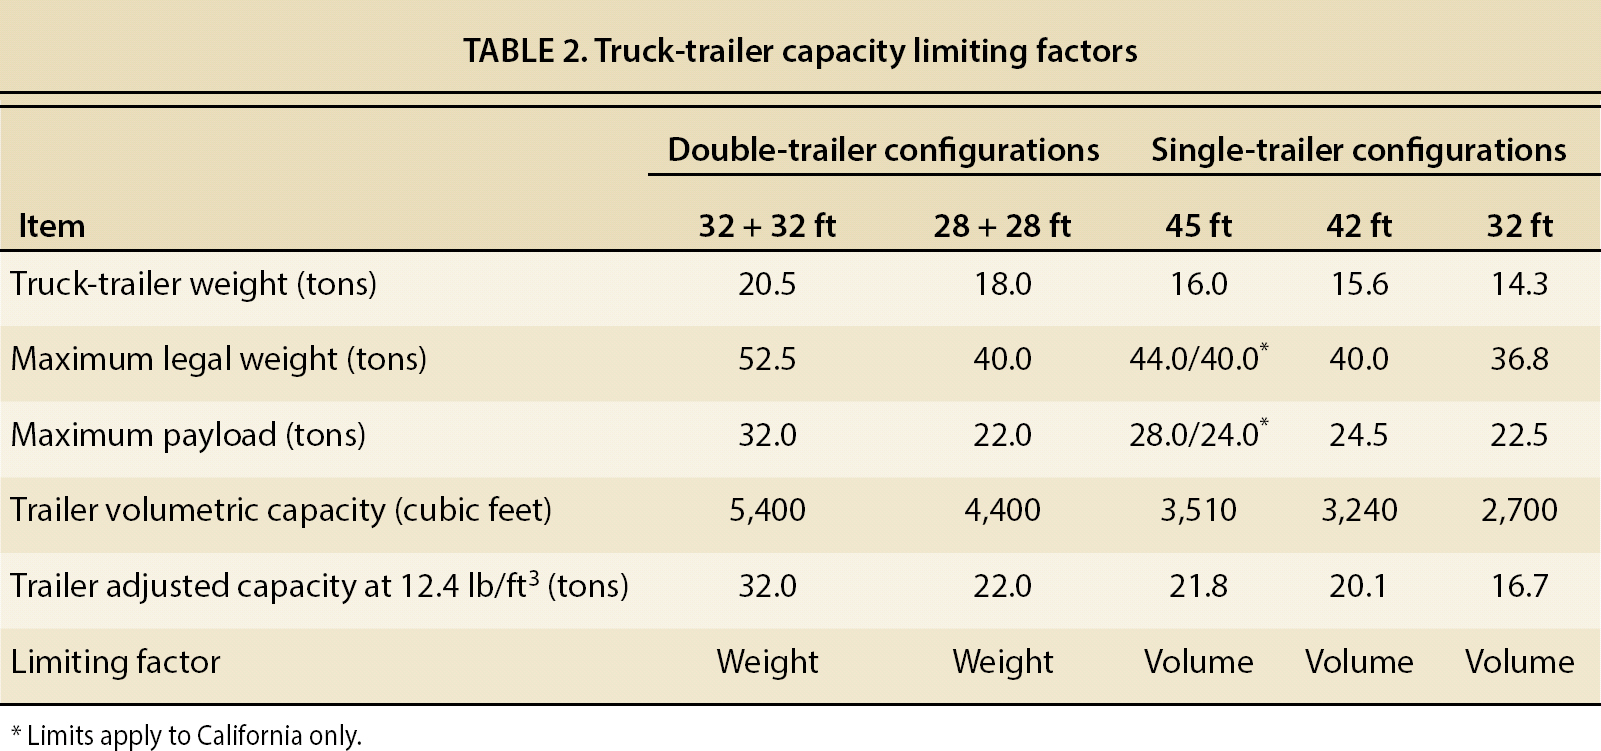 Truck-trailer capacity limiting factors